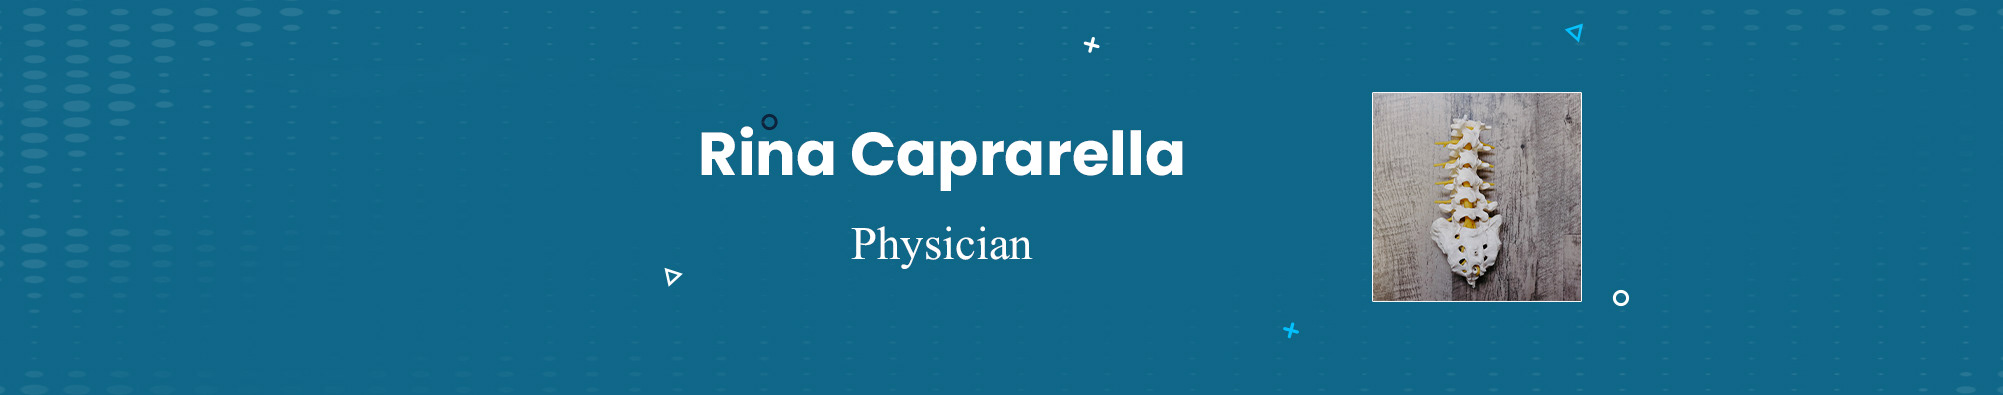 Rina Caprarella profil başlığı